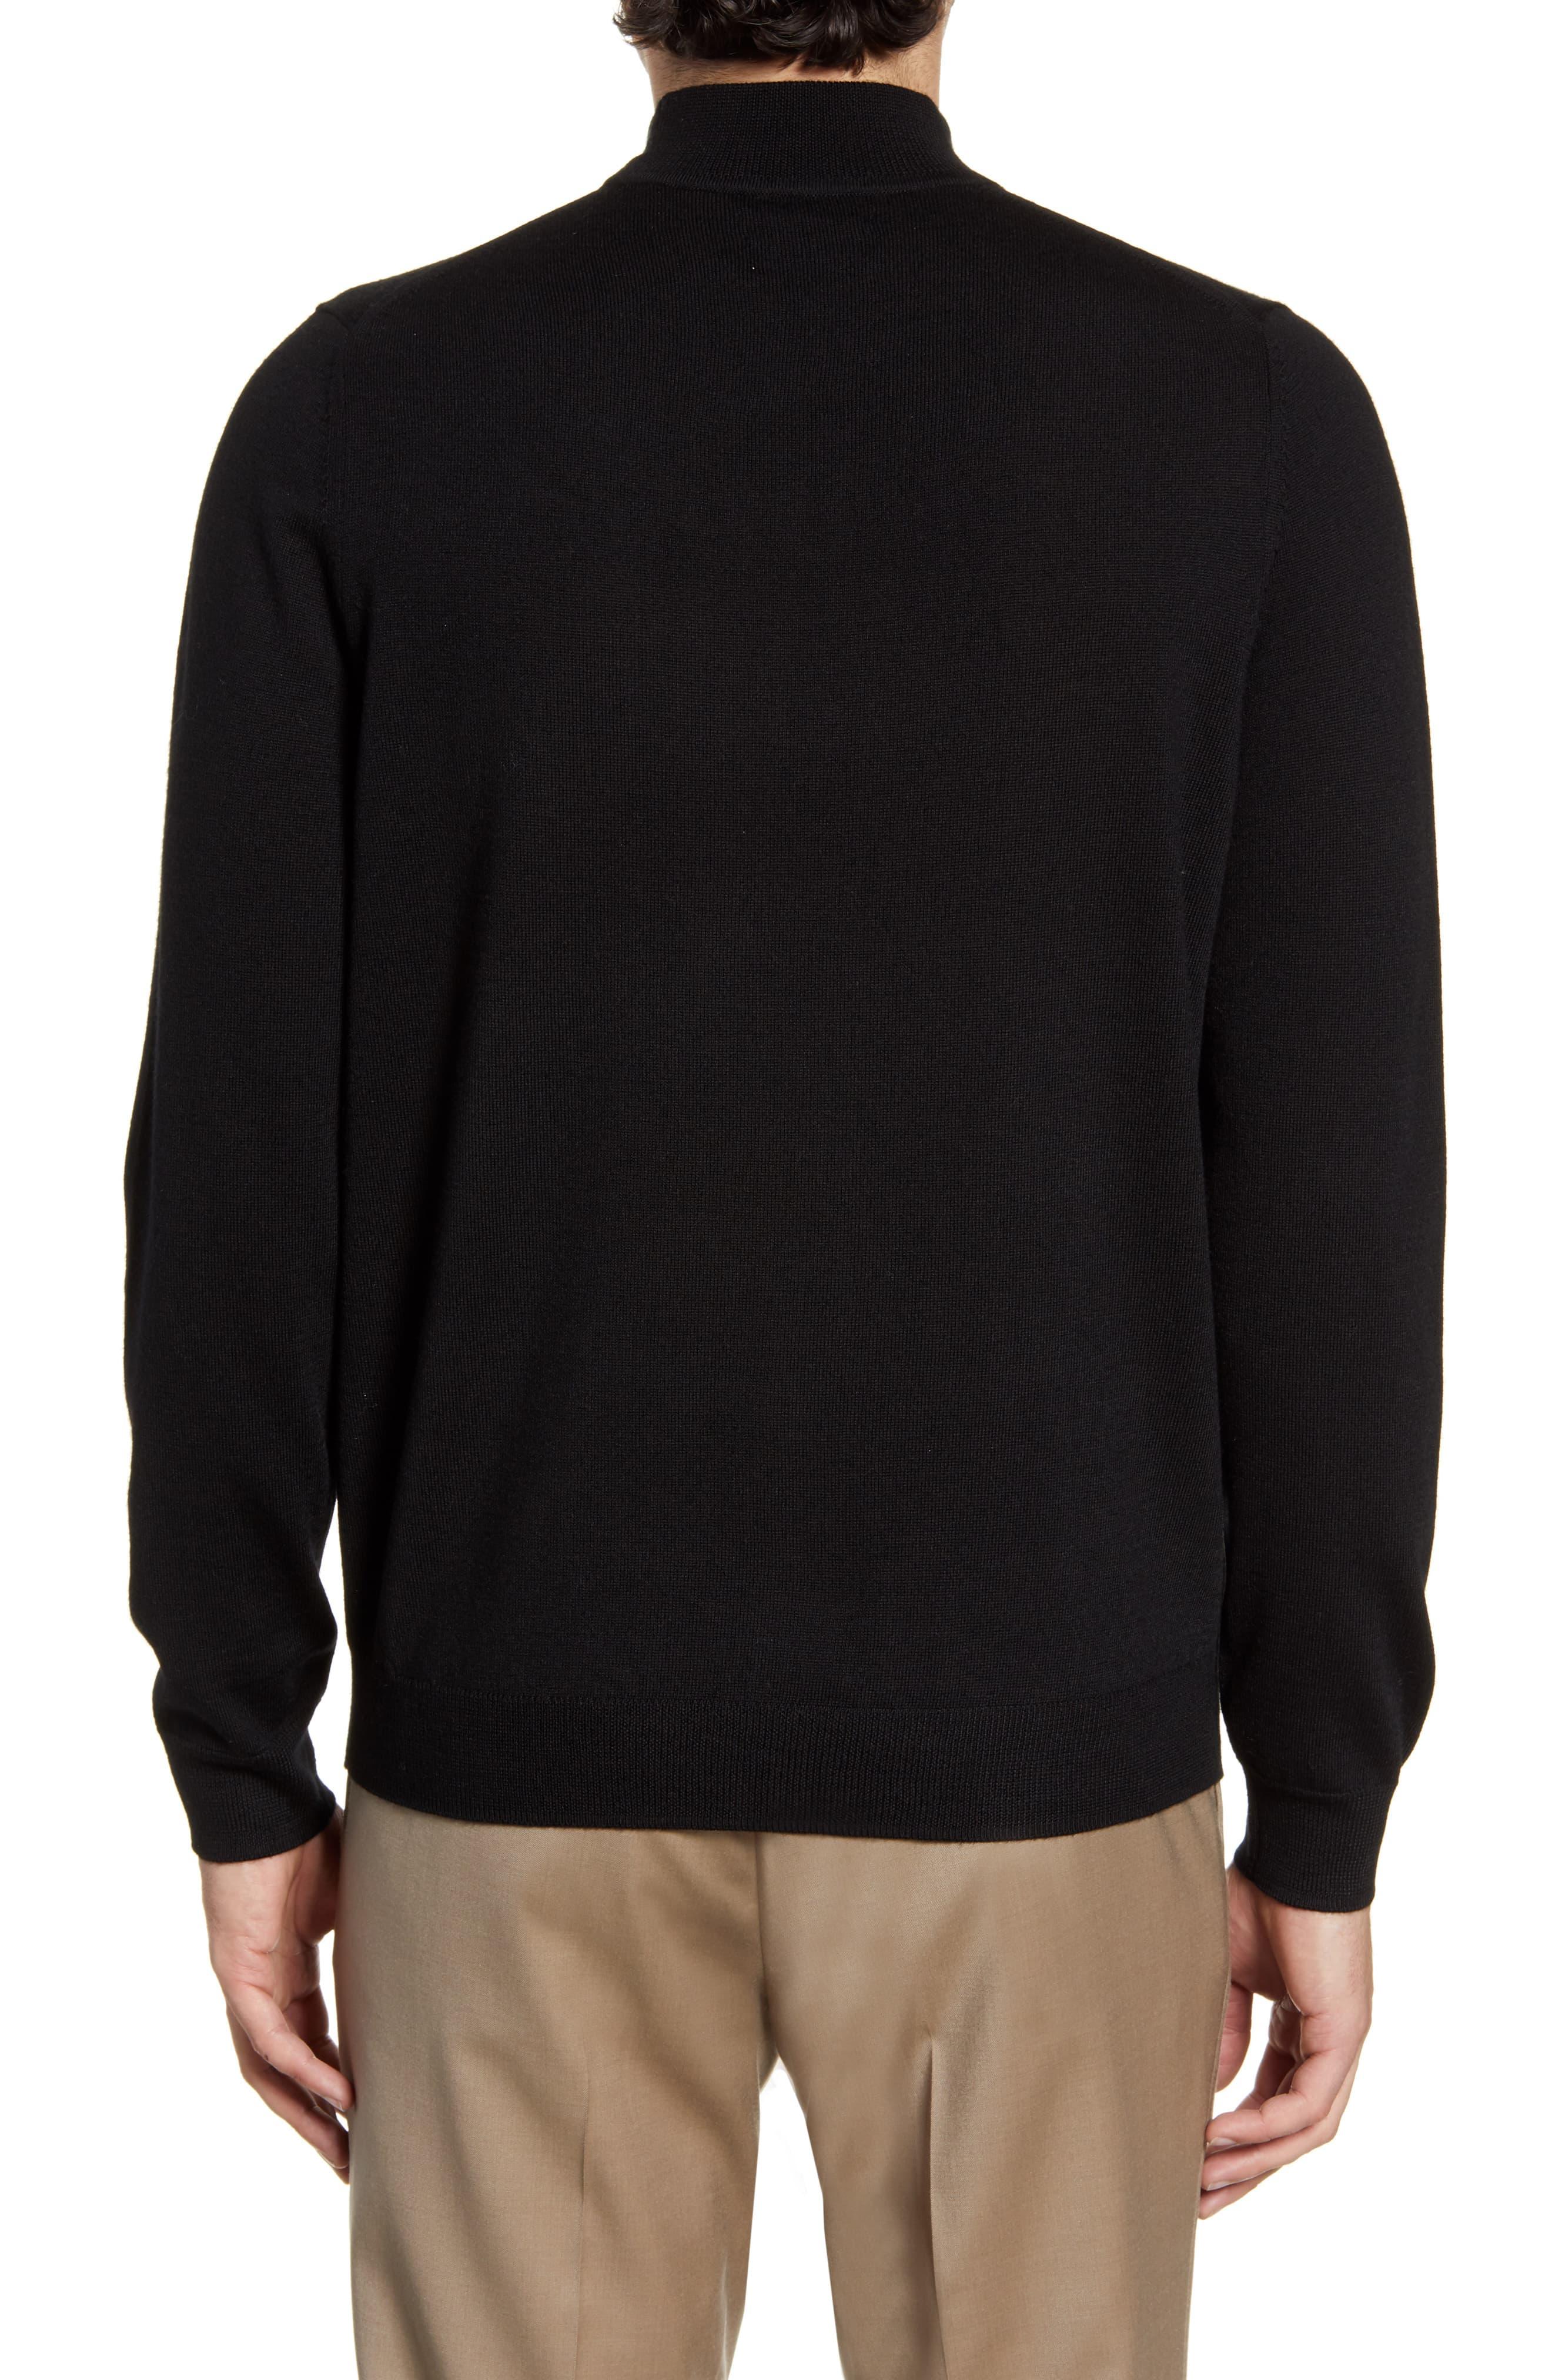 Nordstrom Mock Neck Merino Wool Sweater in Black for Men - Lyst